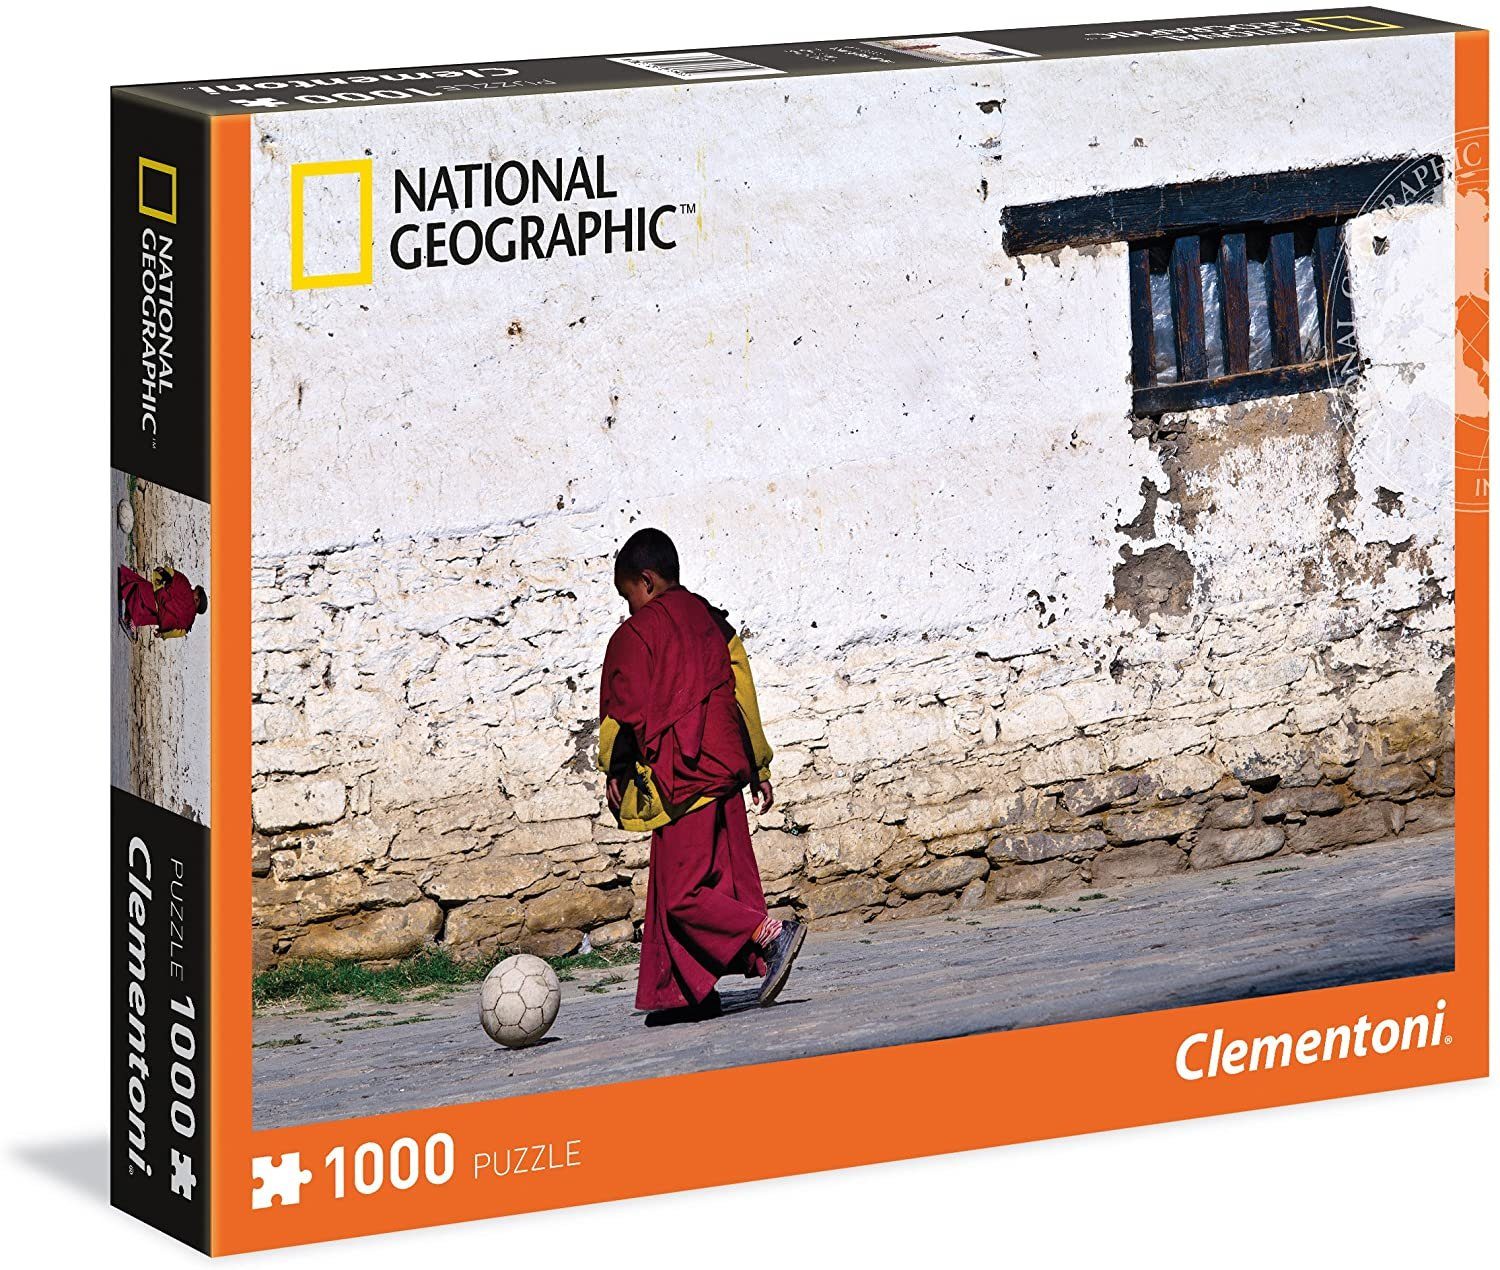 Clementoni® Puzzle Clementoni Puzzle Monk" "Young 1000 Teile, National Puzzleteile Geographic 1000 Buddhist